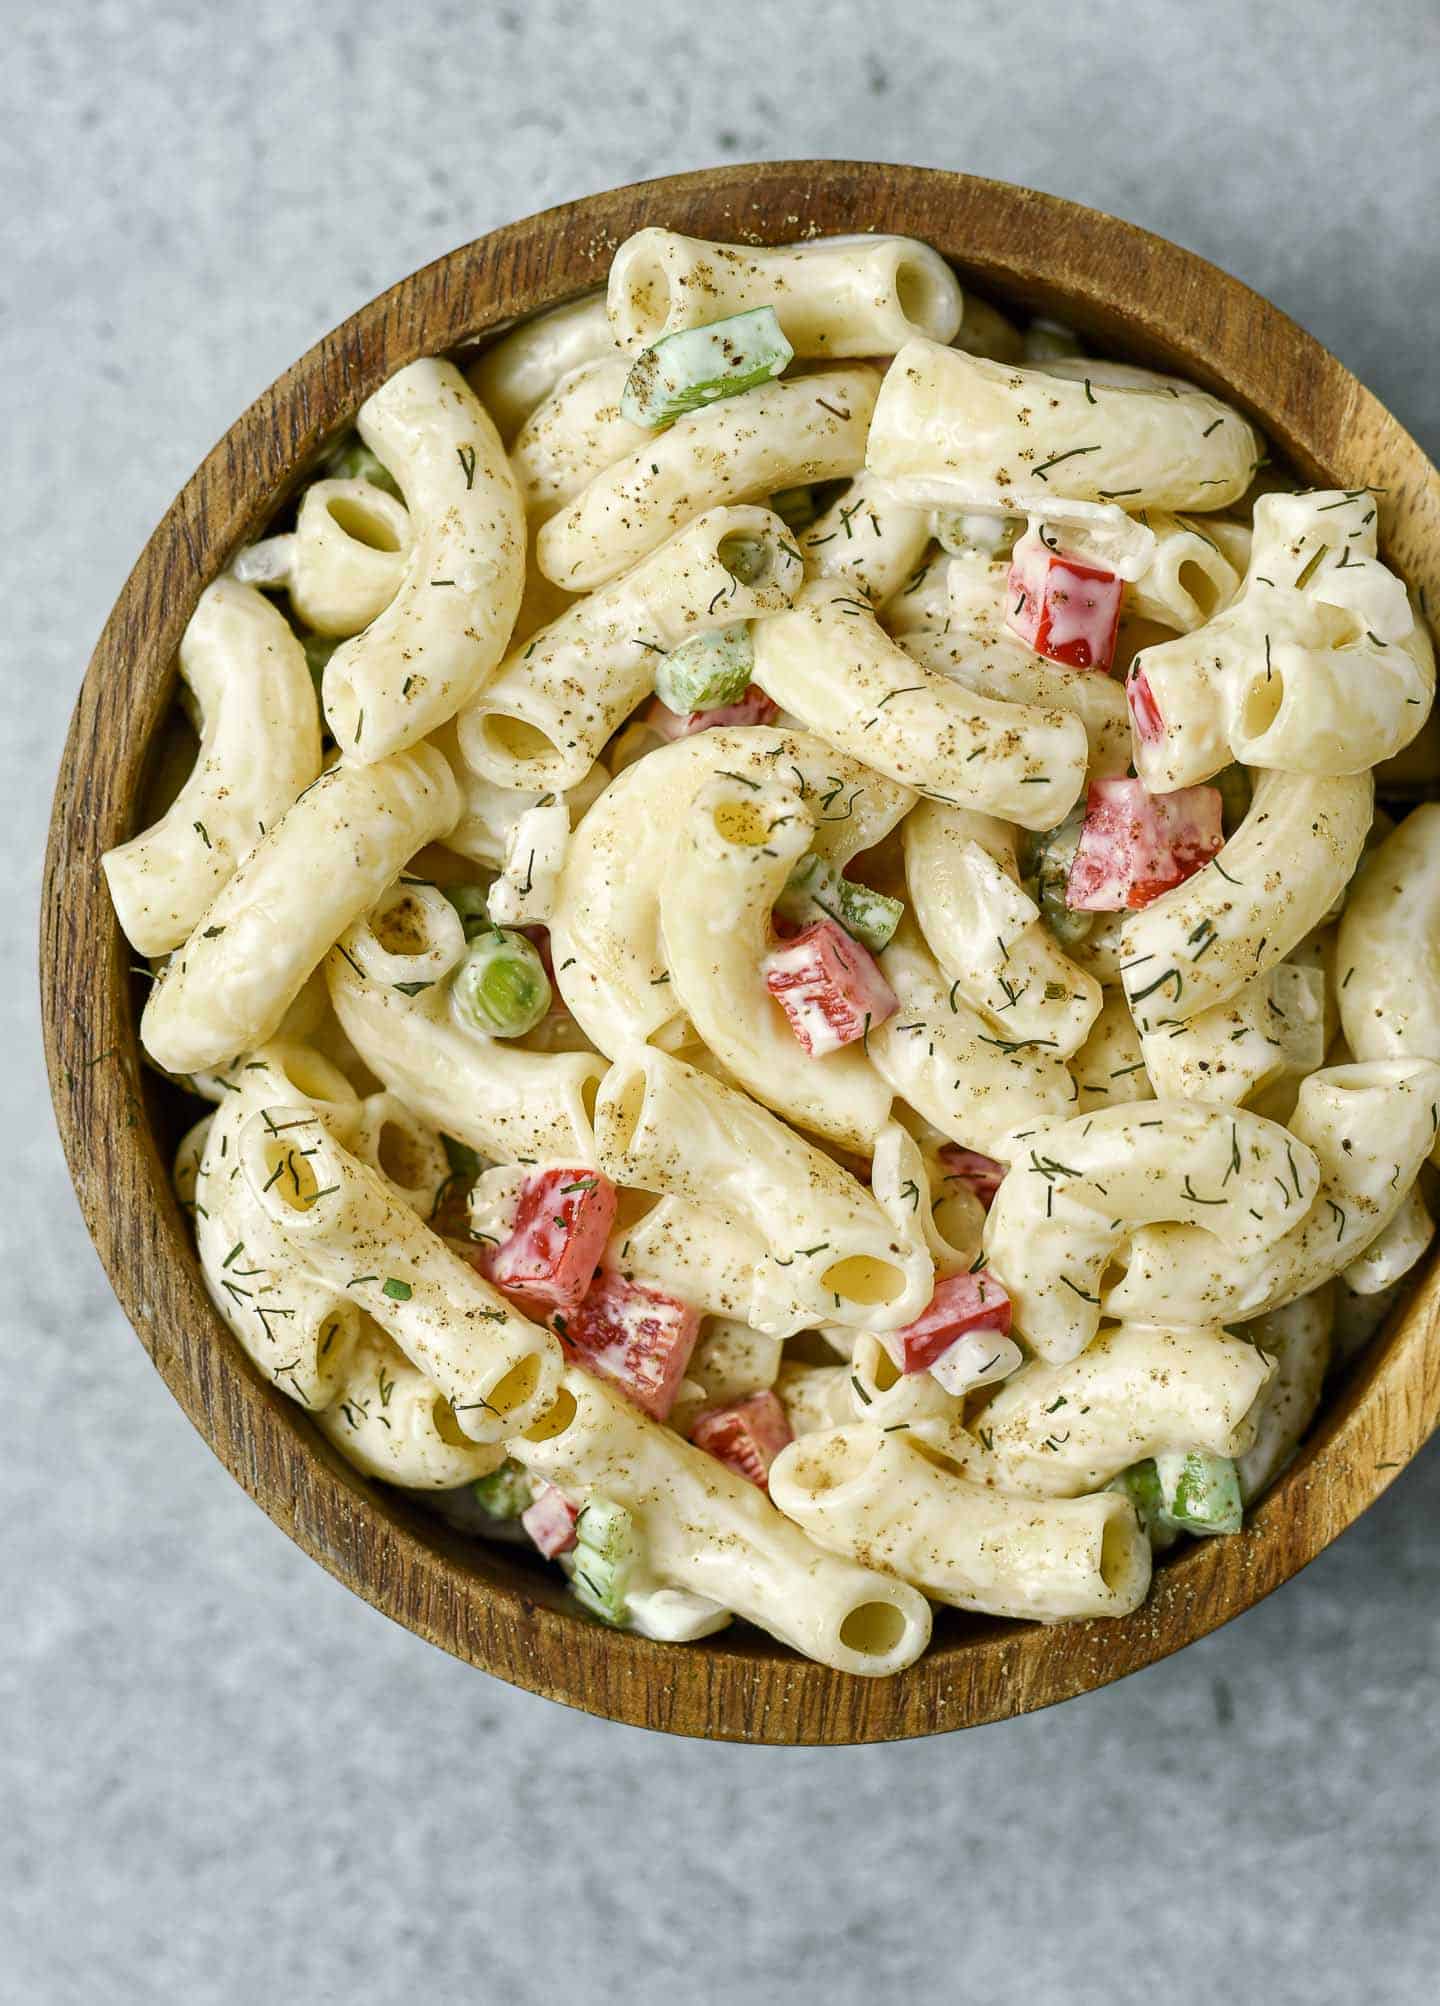 Vegan pasta salad in wooden bowl.